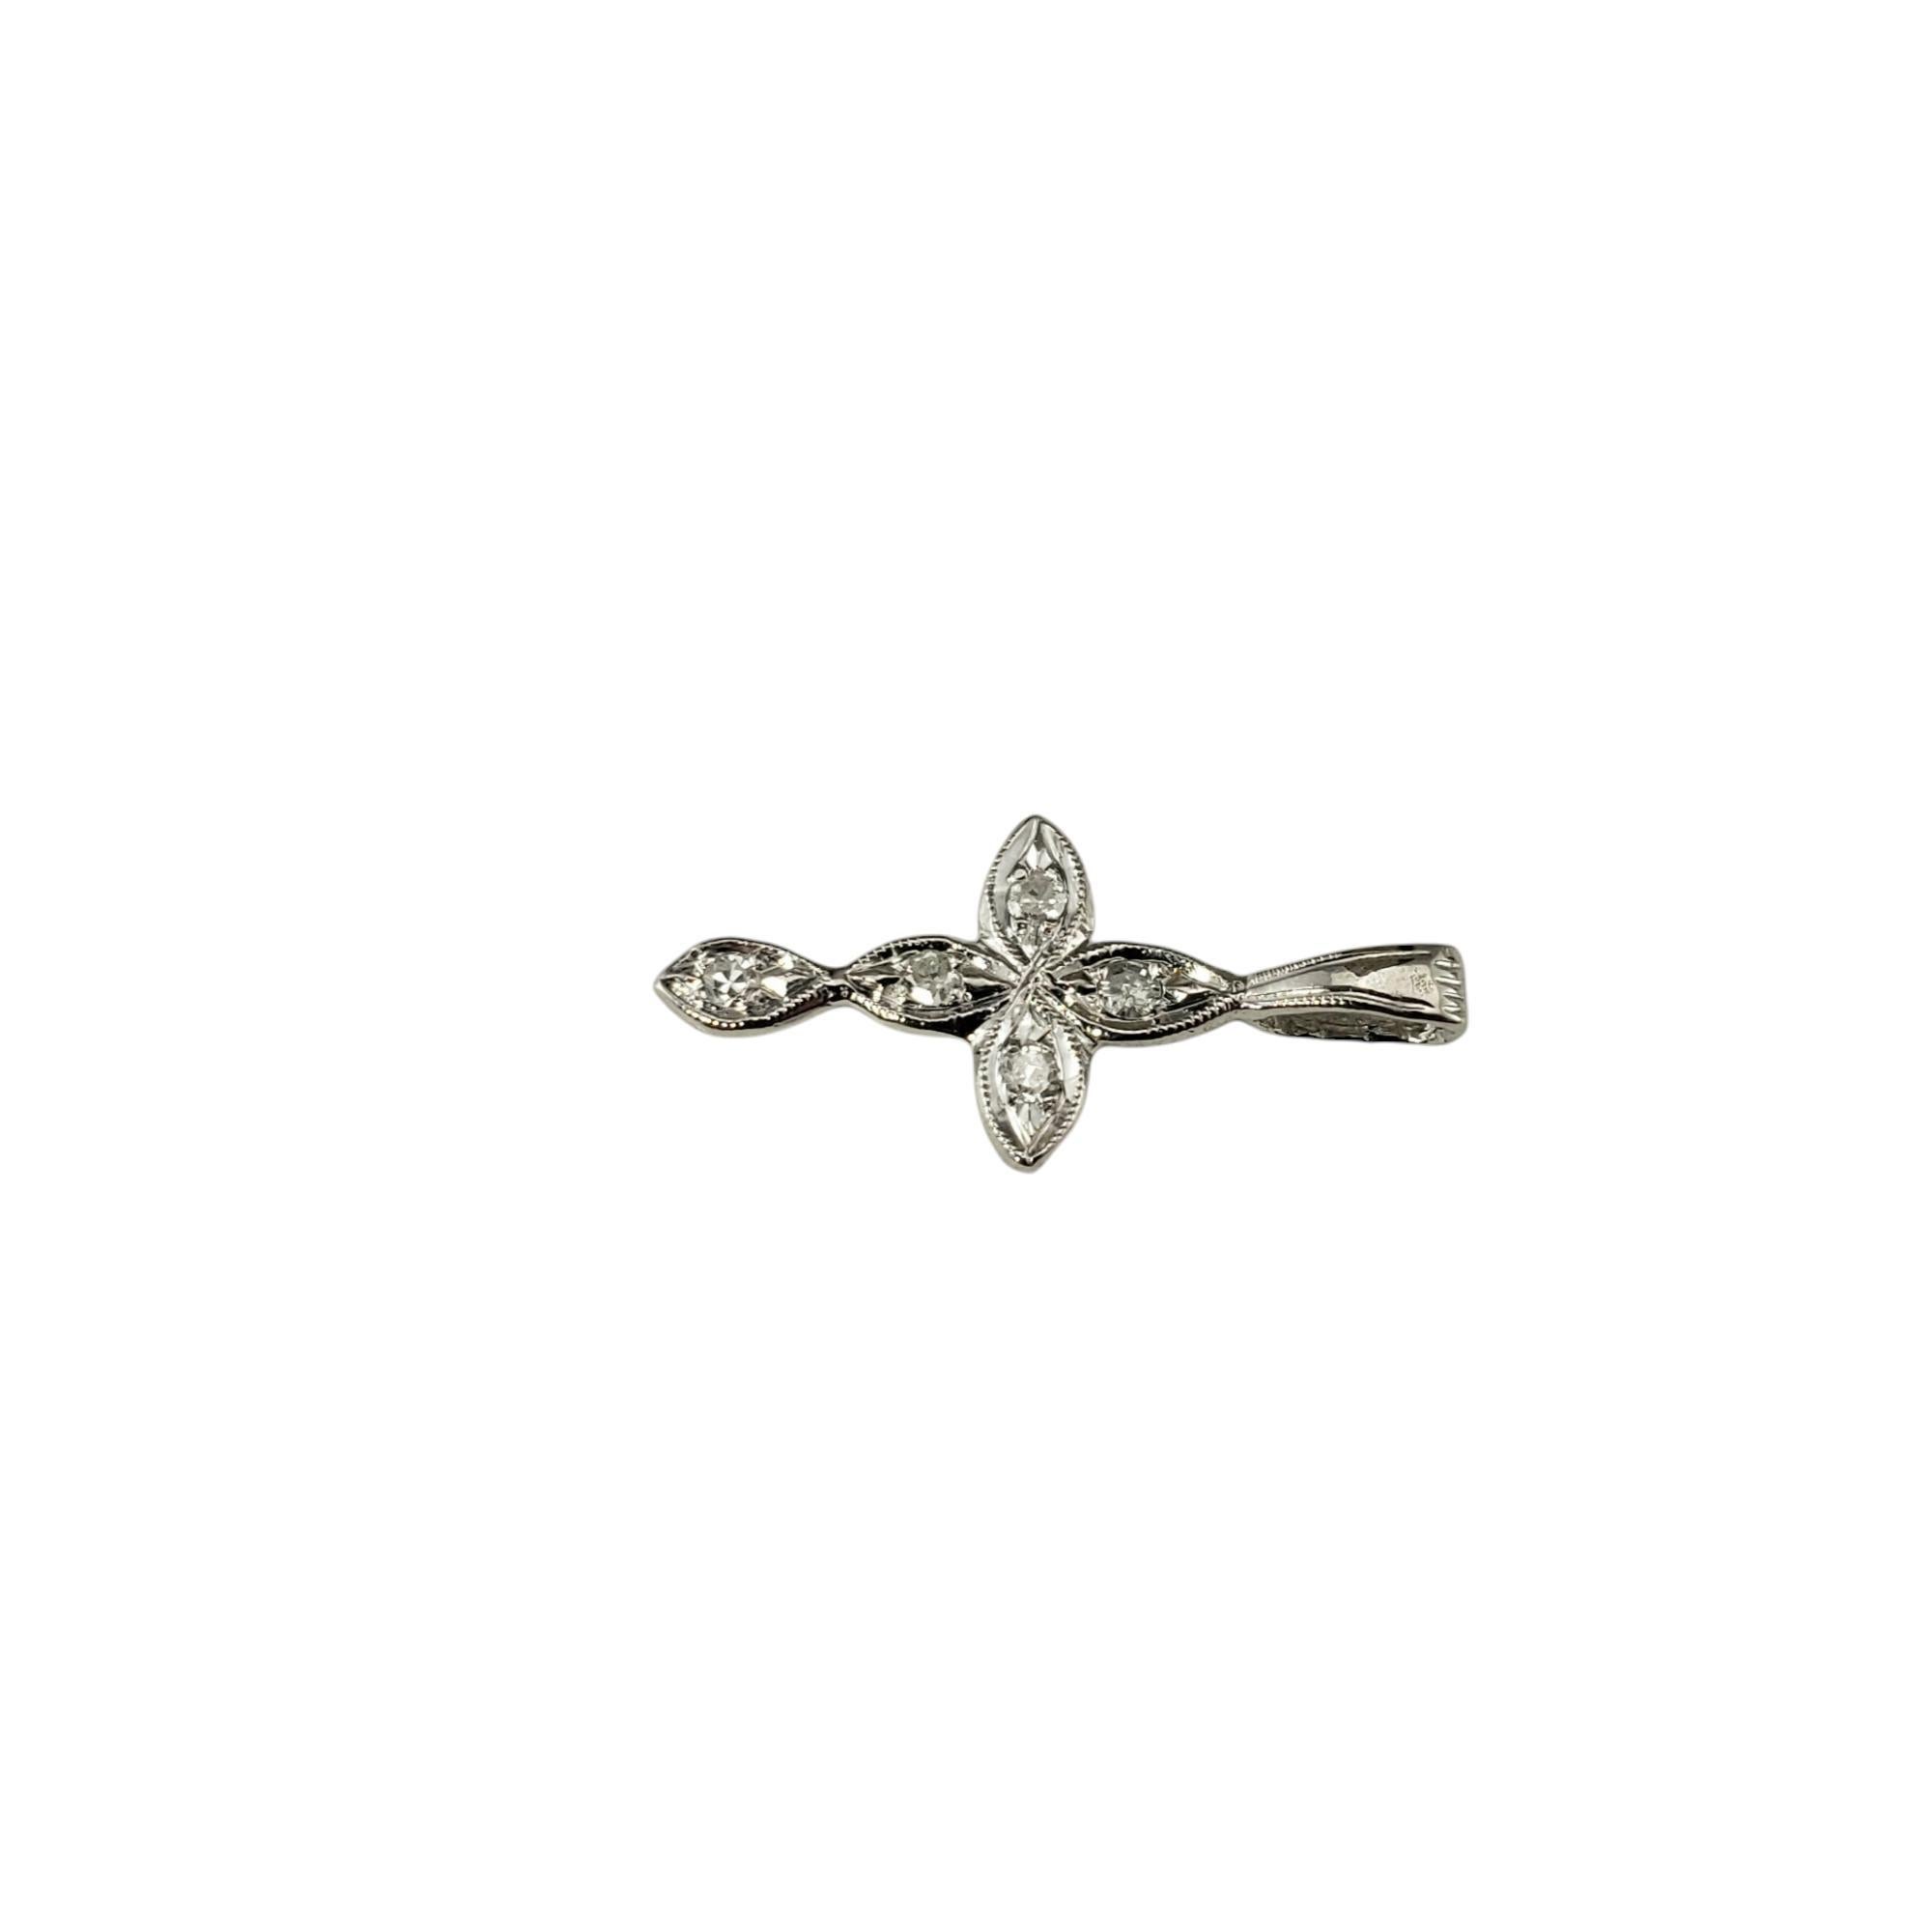 Brilliant Cut 10 Karat White Gold and Diamond Cross Pendant #17204 For Sale